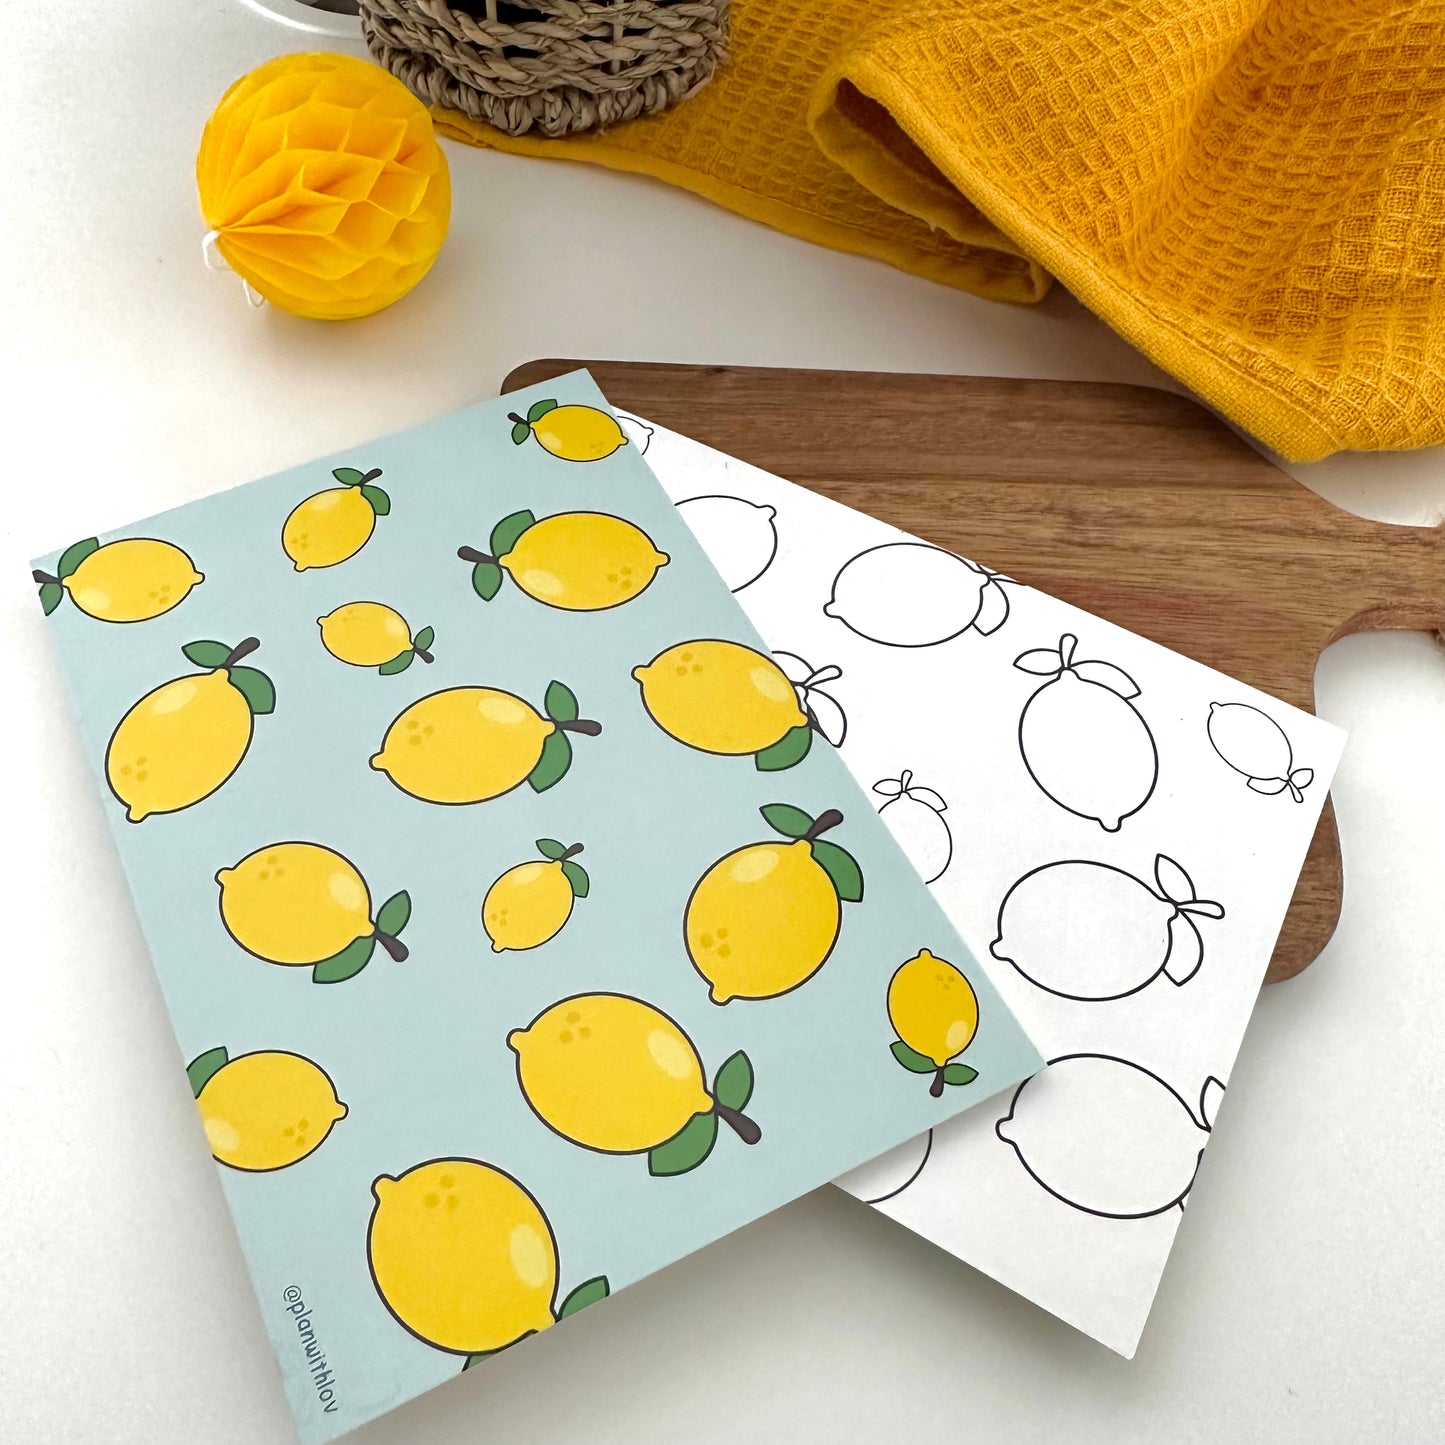 STUDY TRACKER CARD "Lemon"